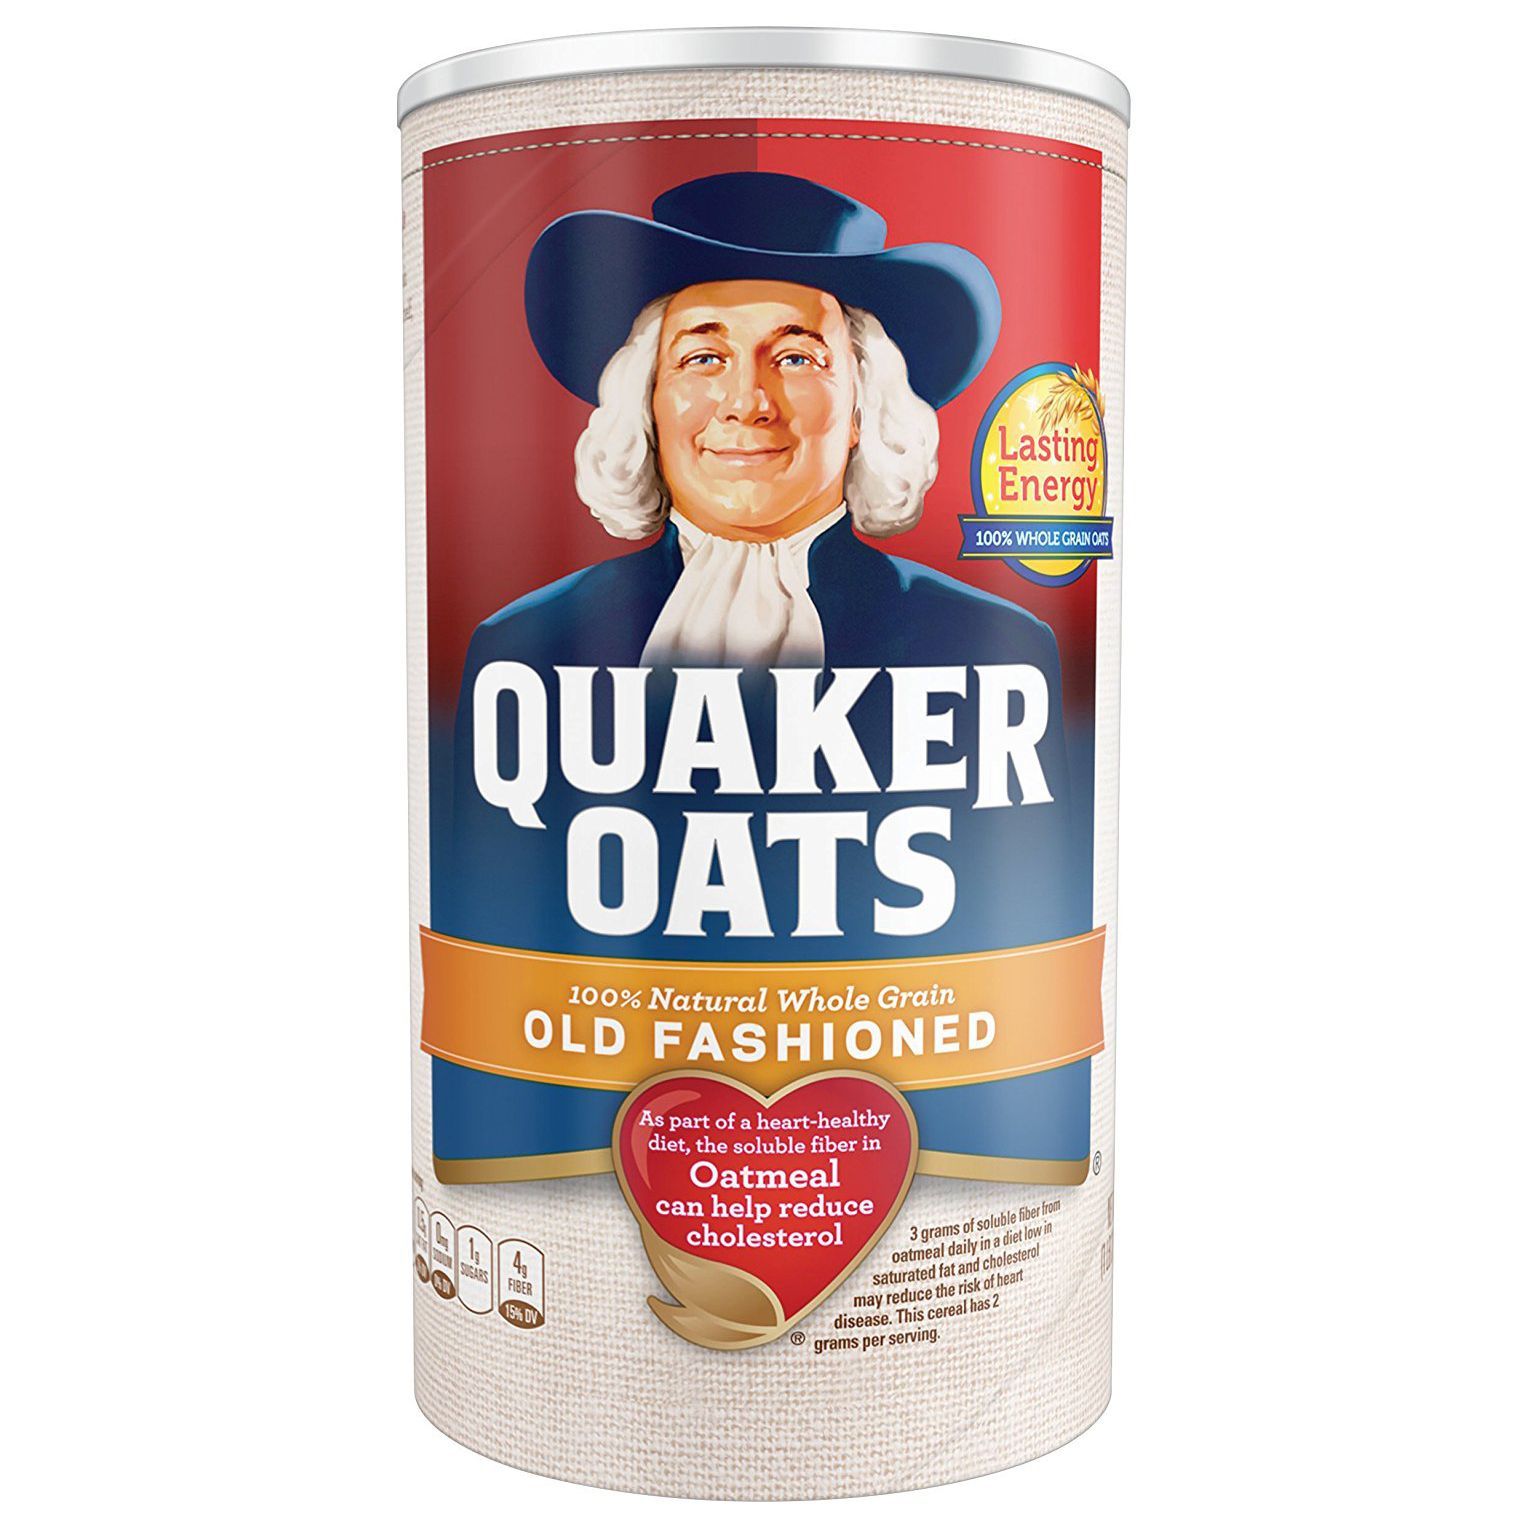 Quaker Oats 100% Natural Old Fashioned Oatmeal